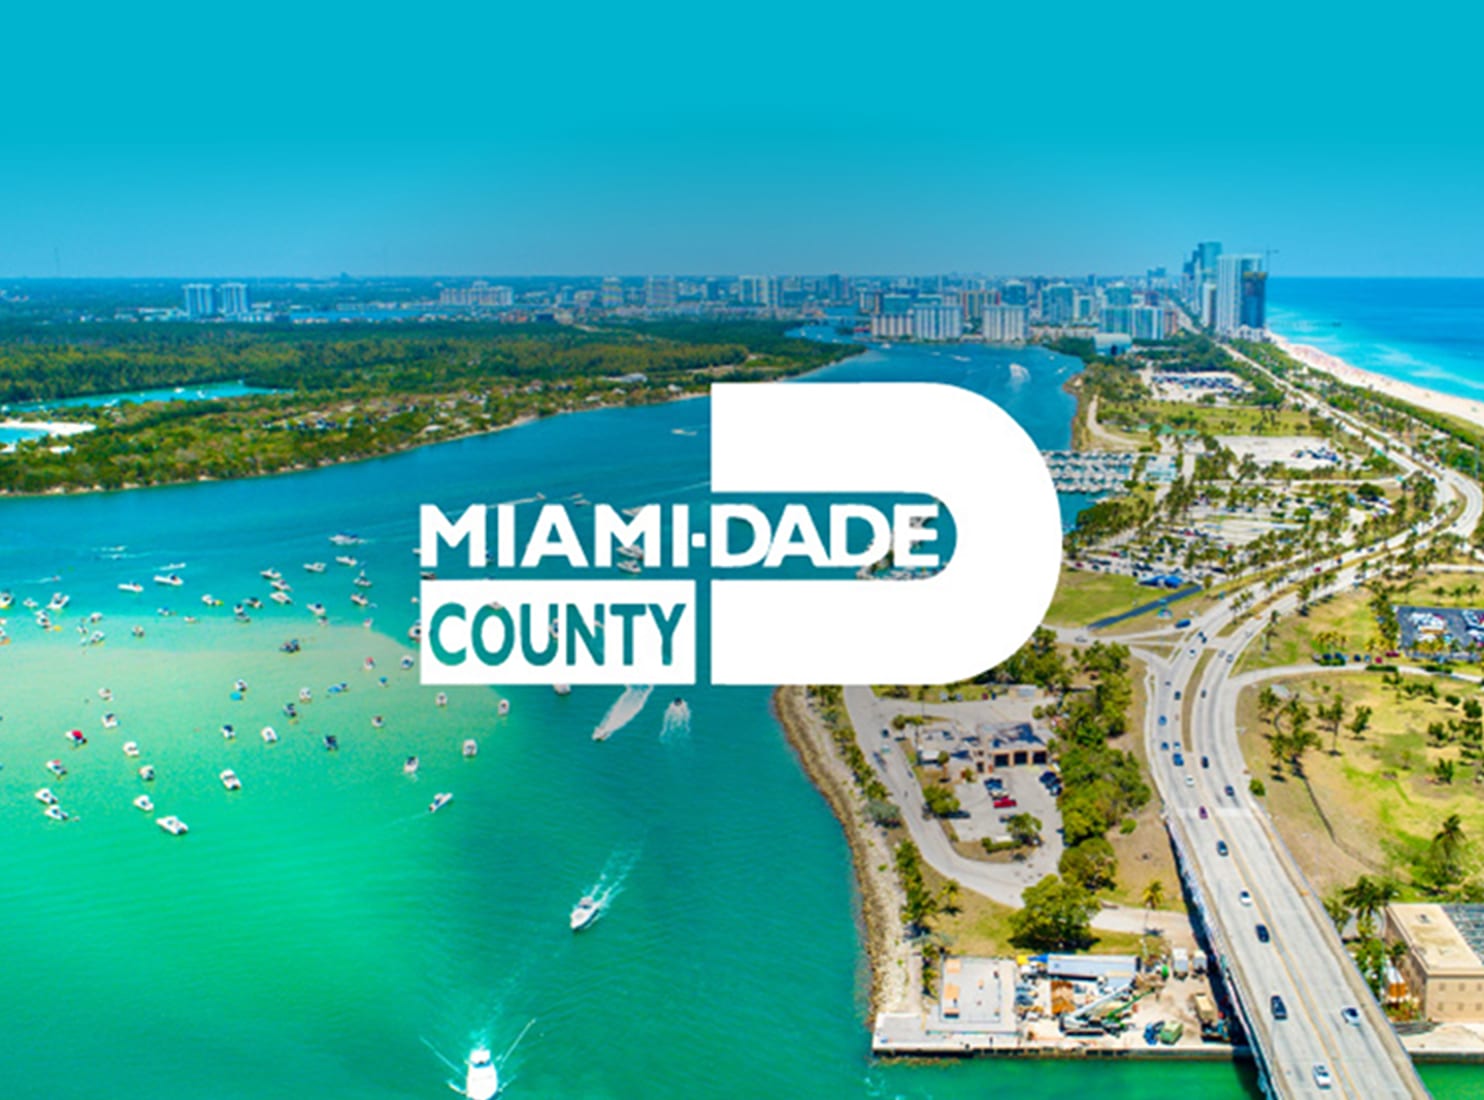 Case Study Miami Dade